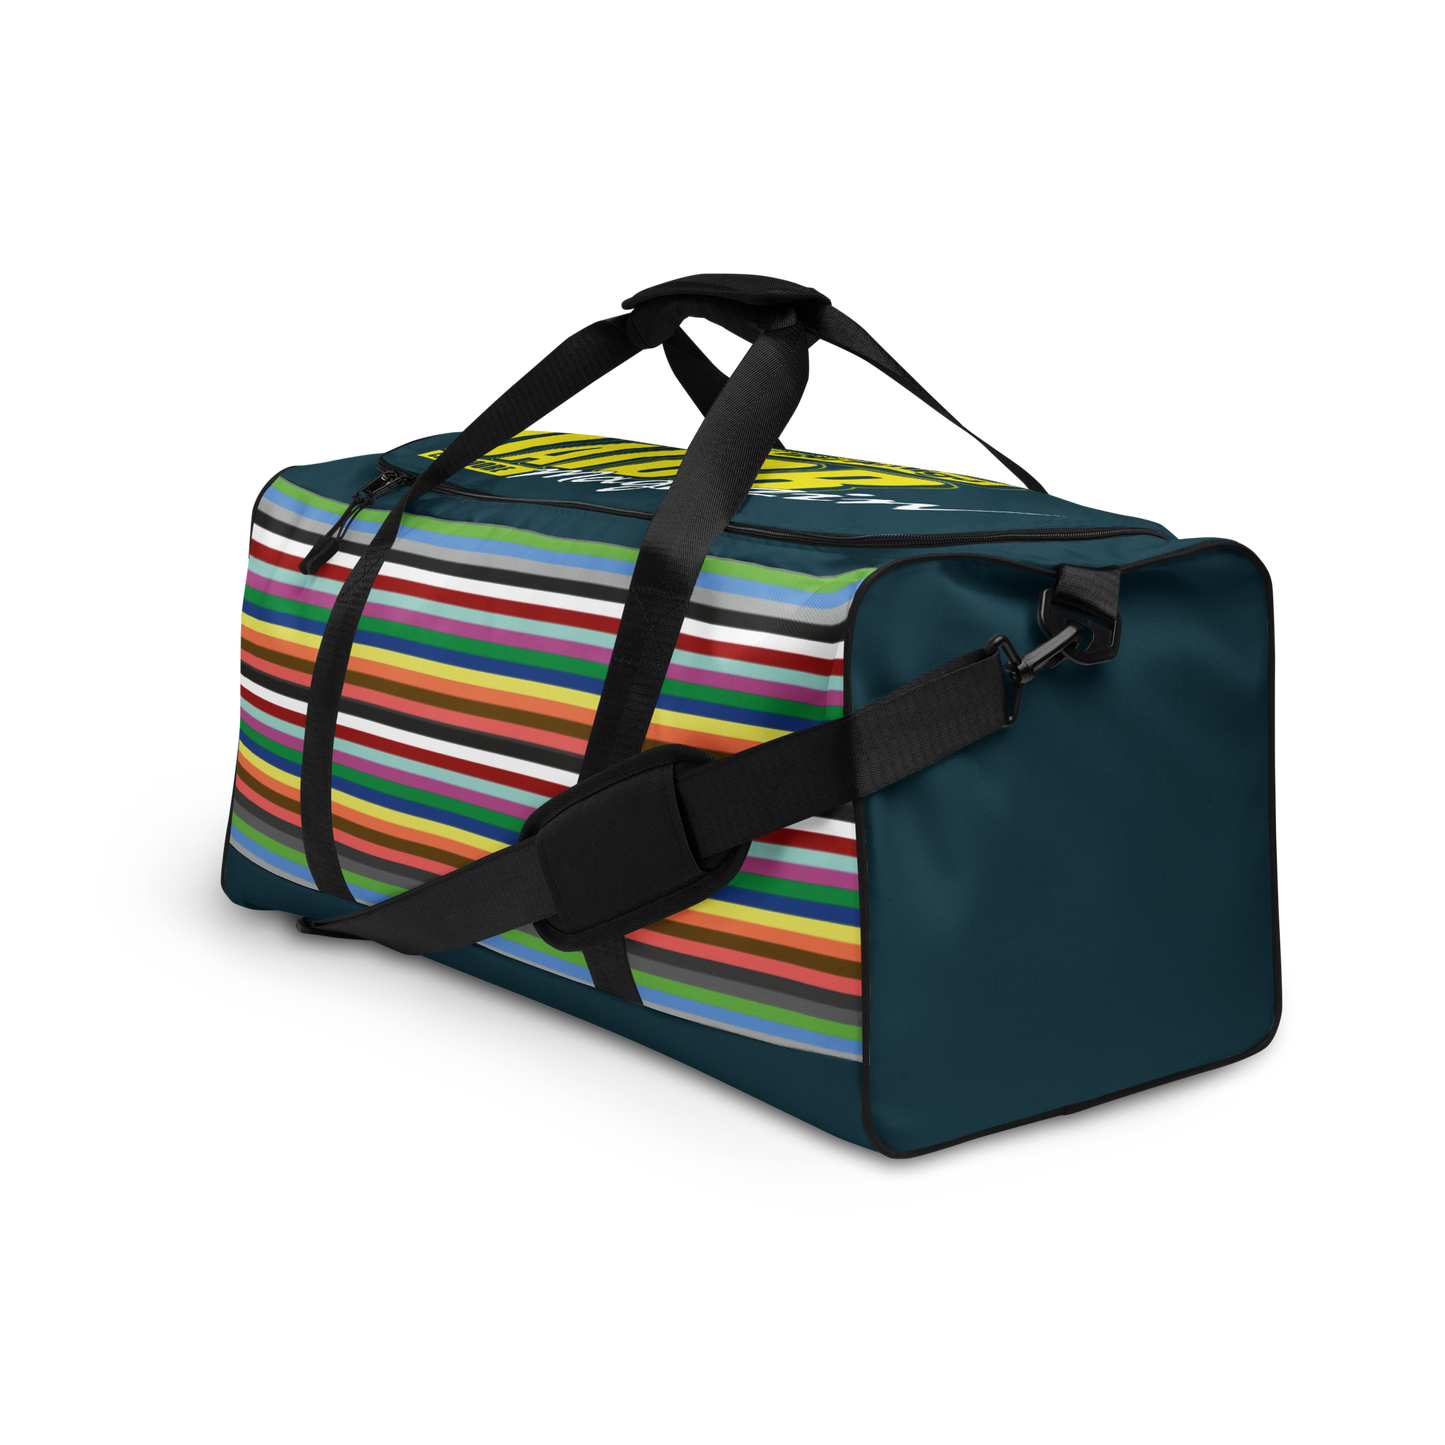 Datormagazin Retro - Computer bag model larger - 16 colors